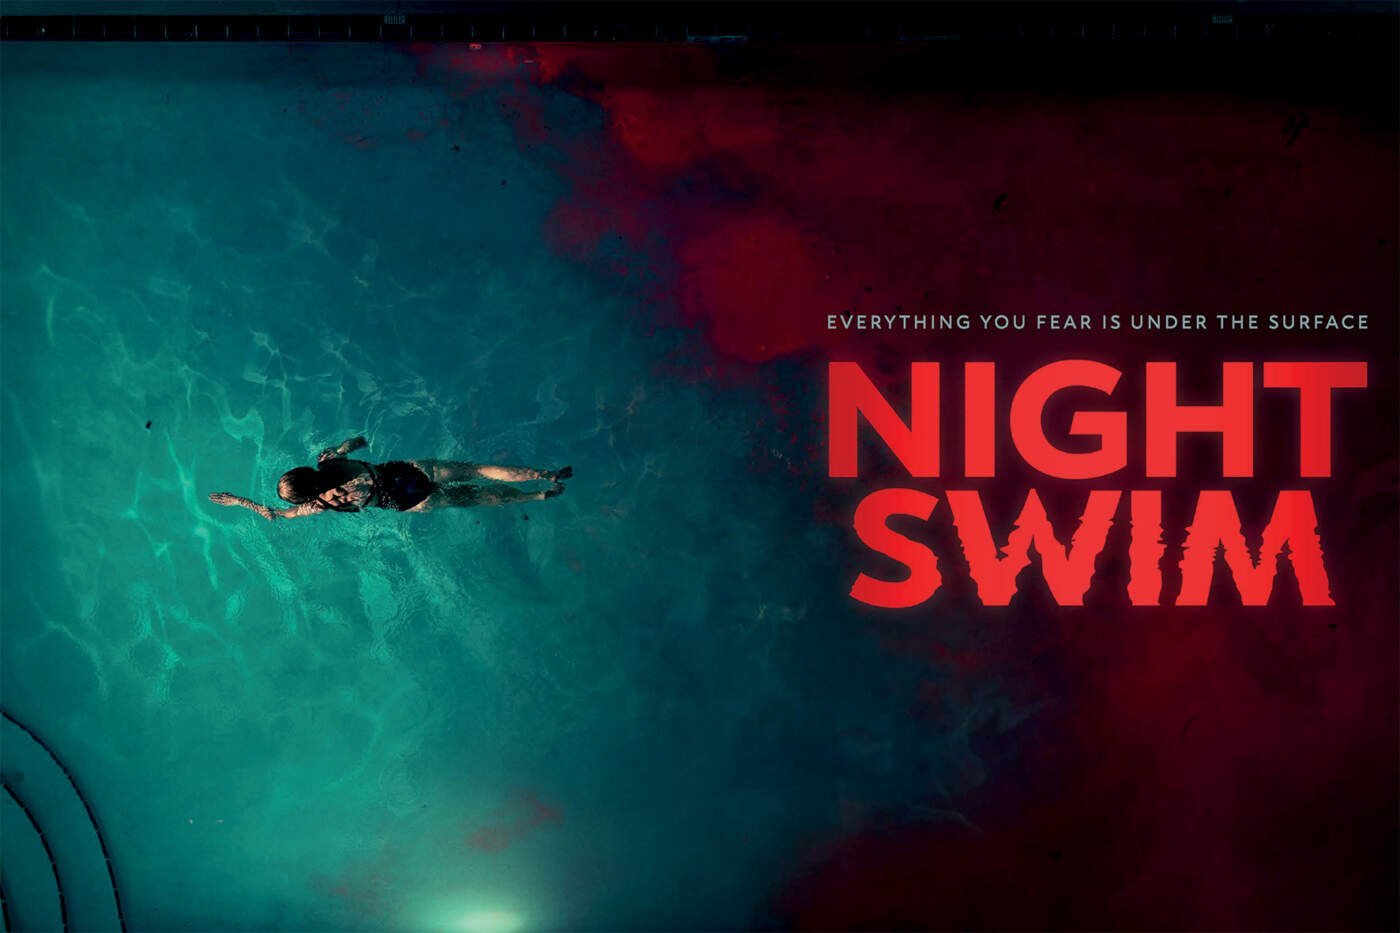 Night Swim Poster